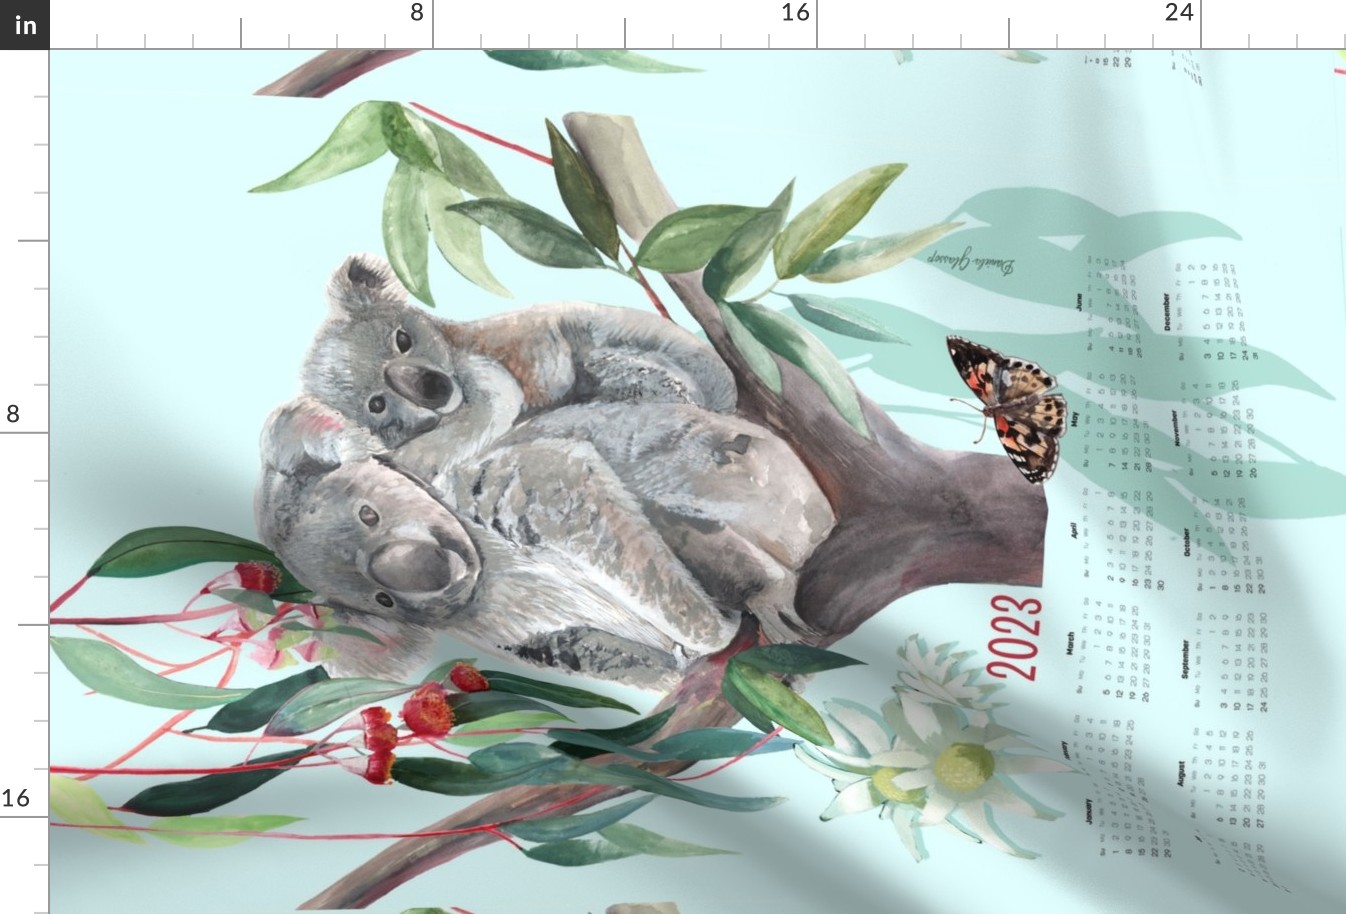 For the Love of Koalas-TeaTowel-2023 Calendar (updated from 2022 calendar)